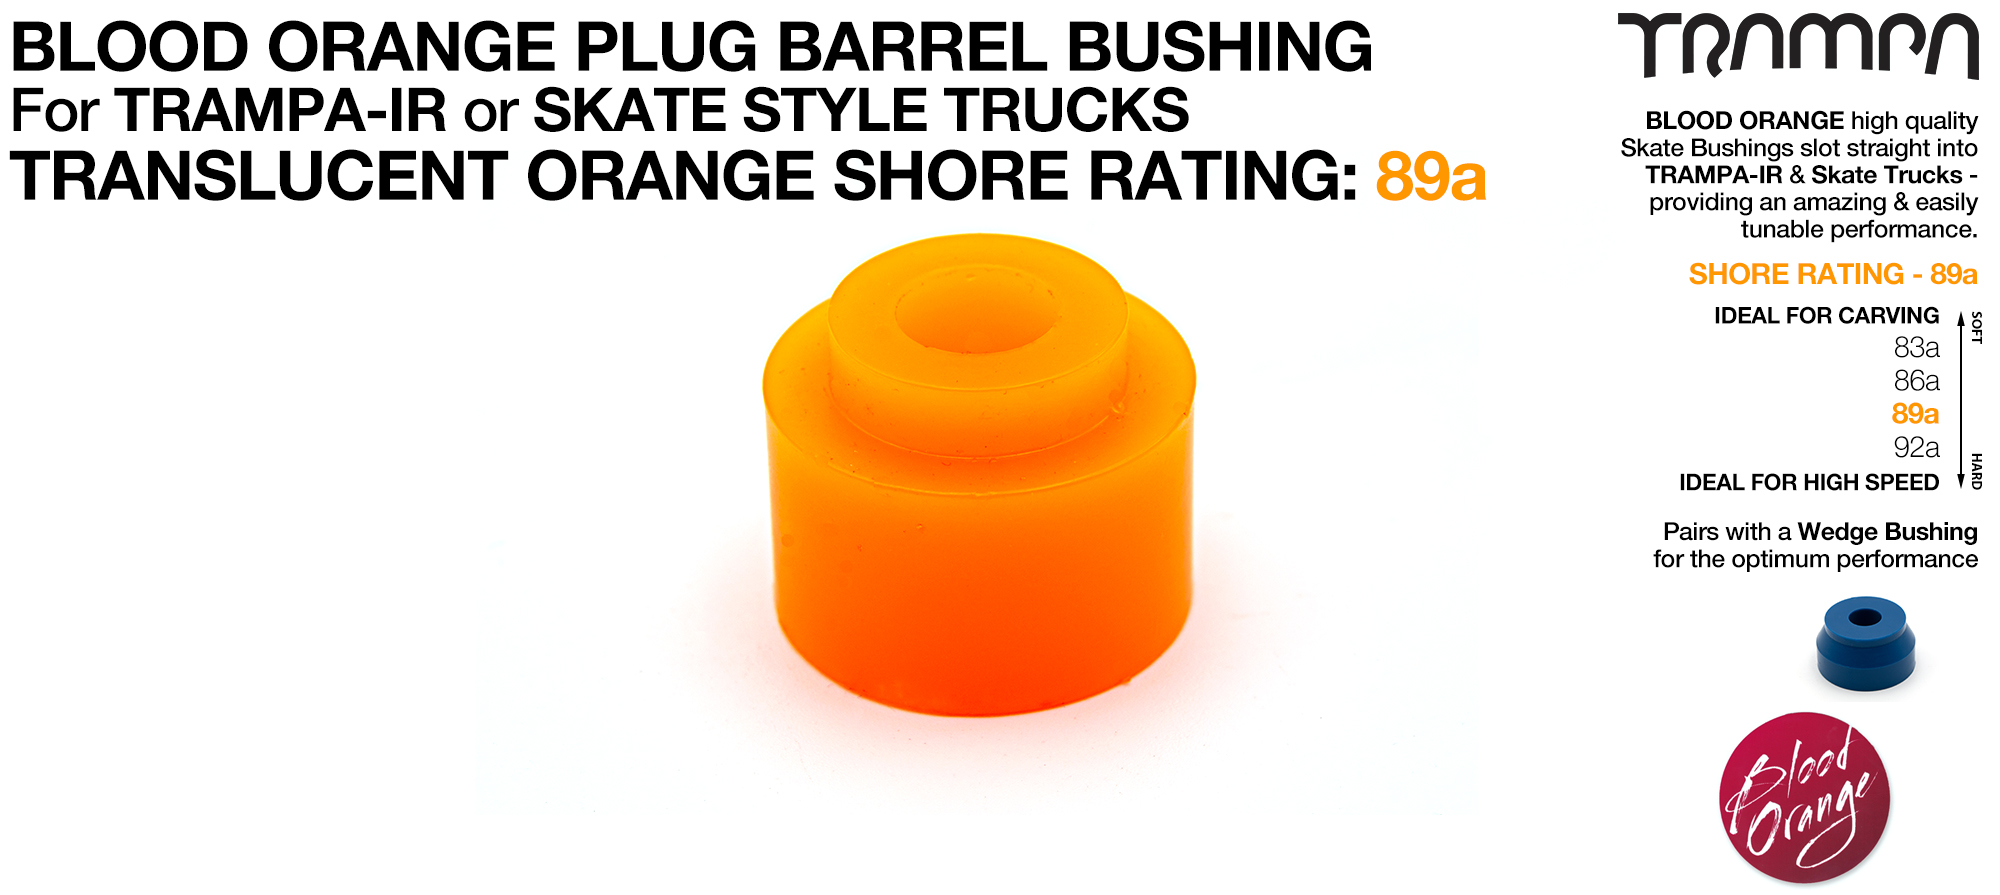 Blood Orange PLUG BARREL - ORANGE 89a